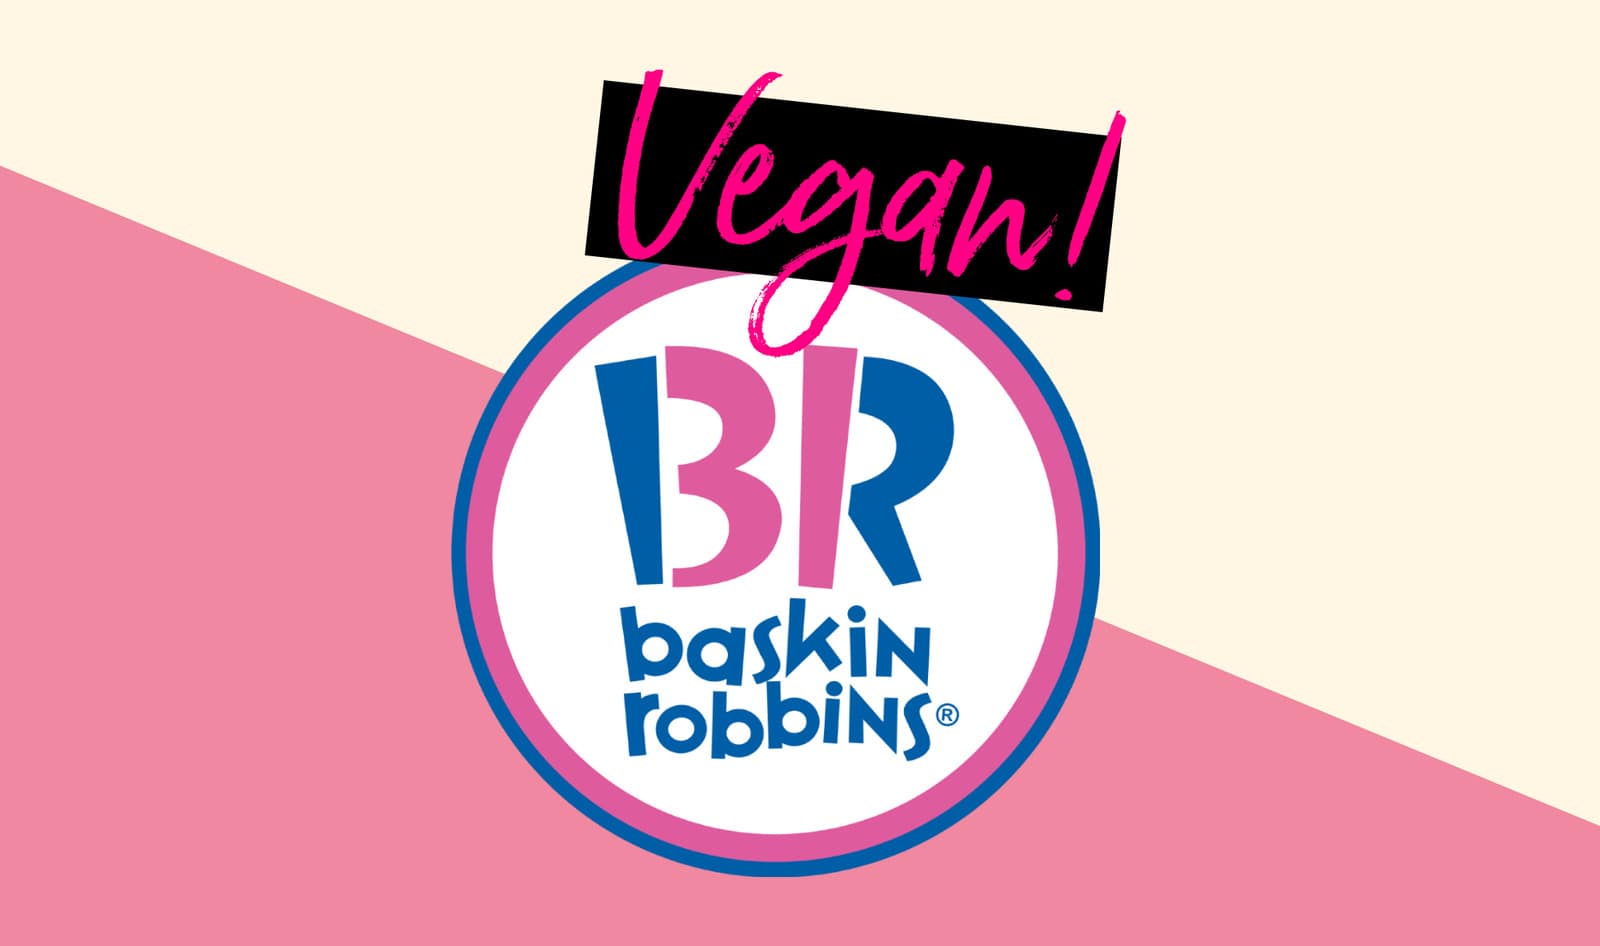 VegNews.VeganBaskinRobbins